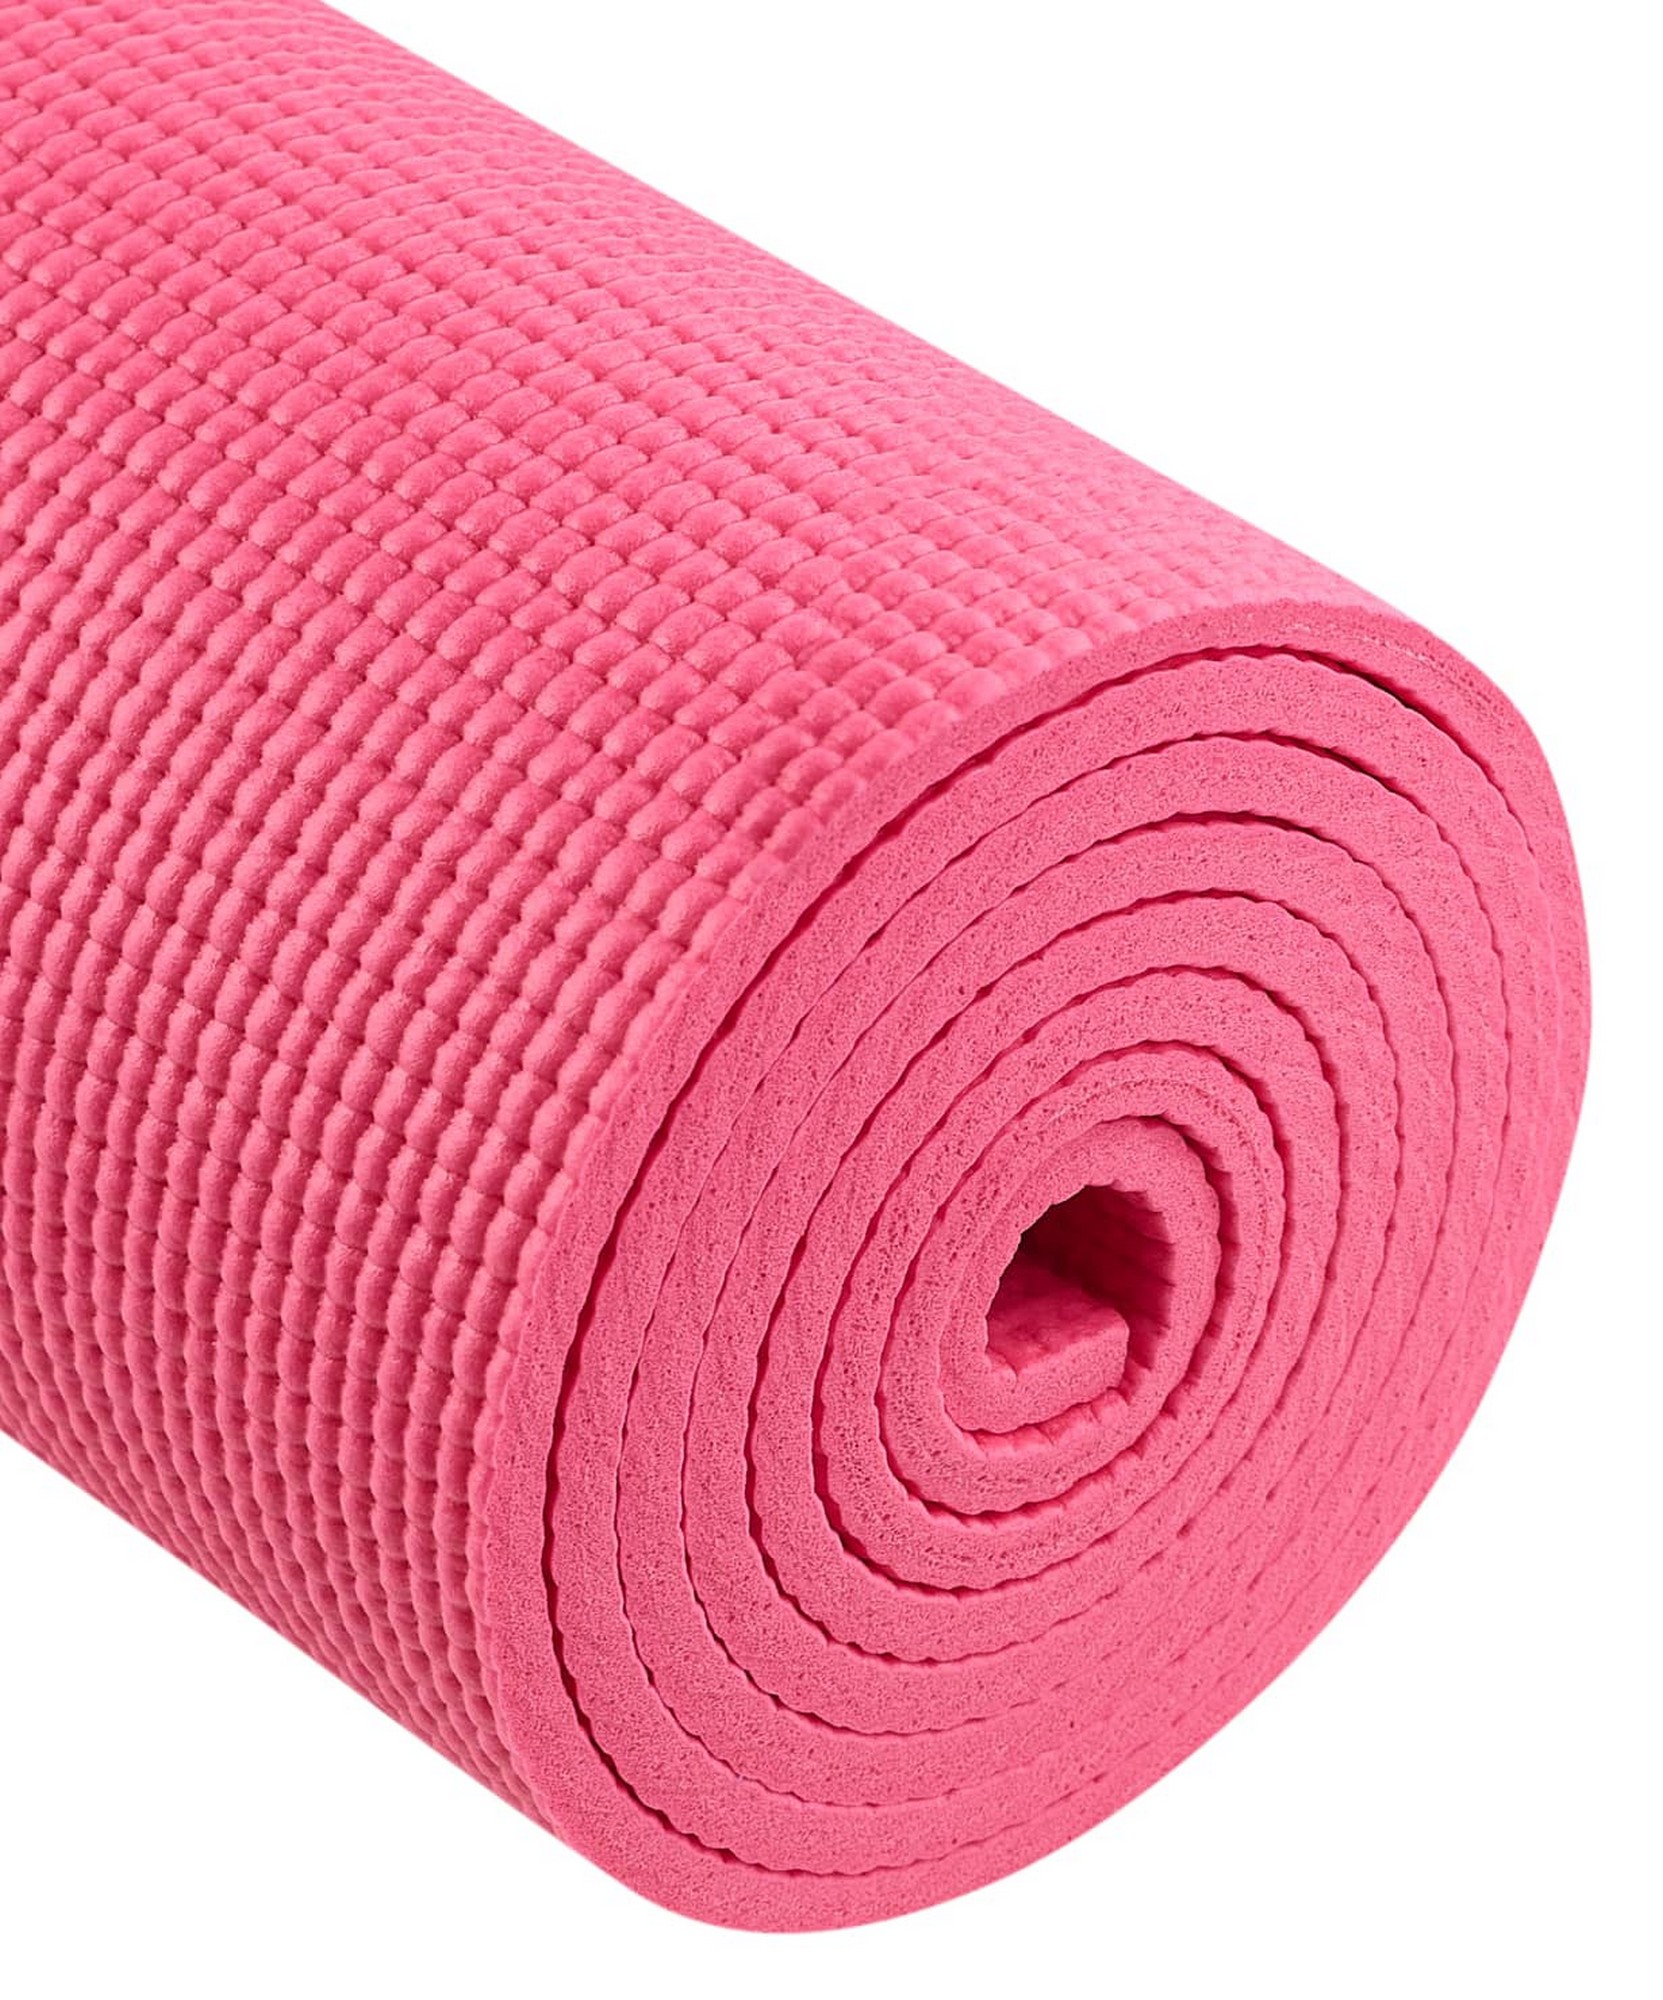 Коврик для йоги и фитнеса 183x61x0,6см Star Fit PVC FM-101 розовый 1663_2000